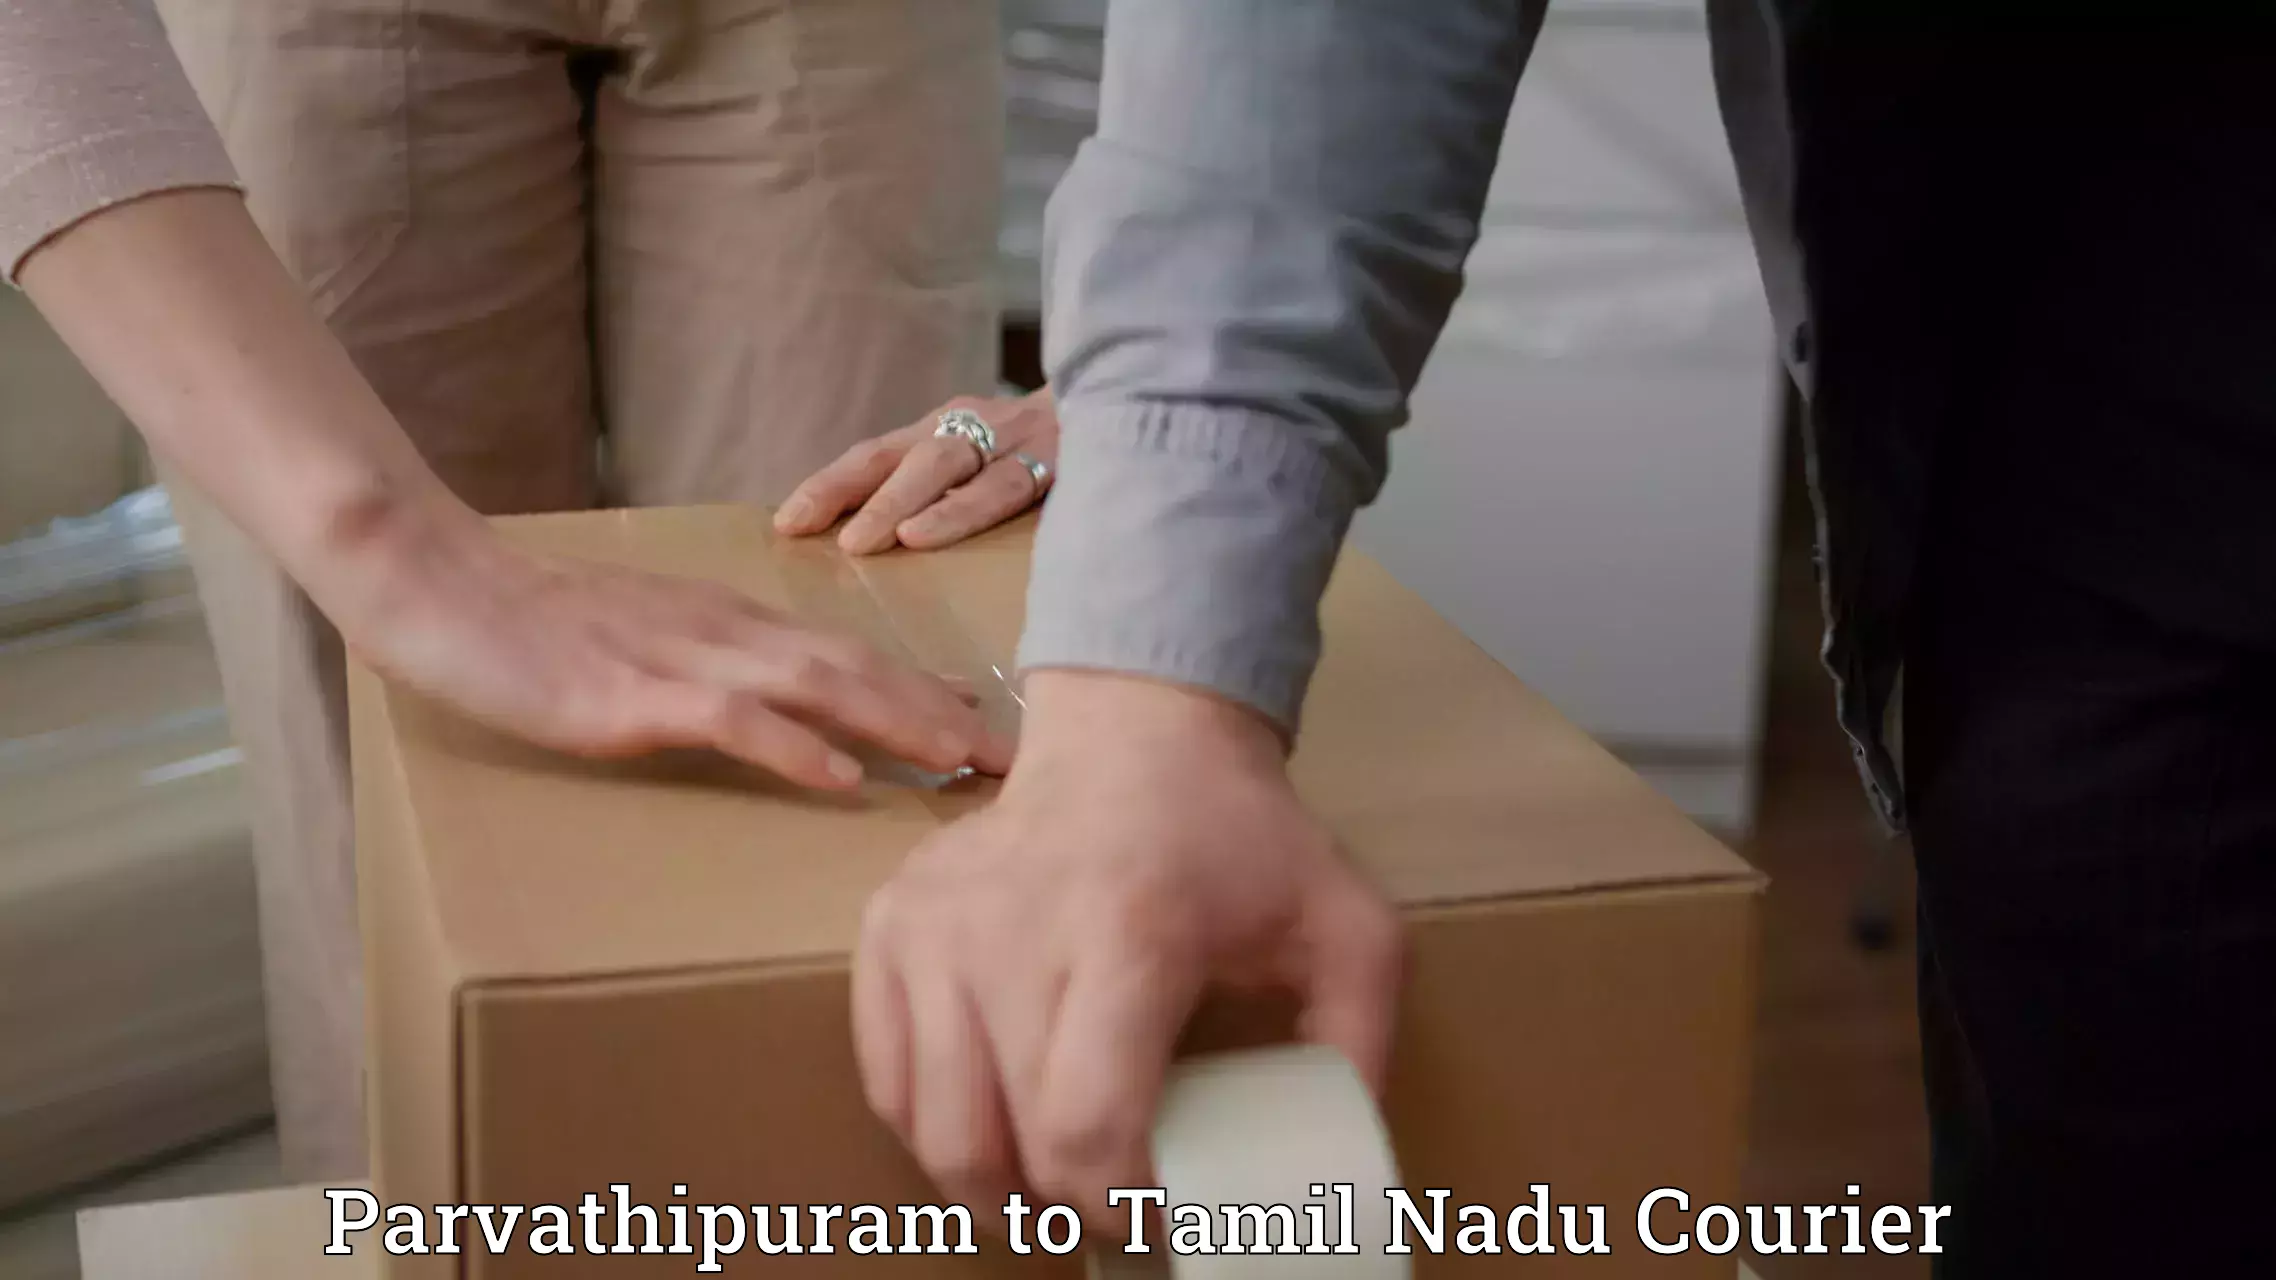 Express logistics Parvathipuram to Tamil Nadu